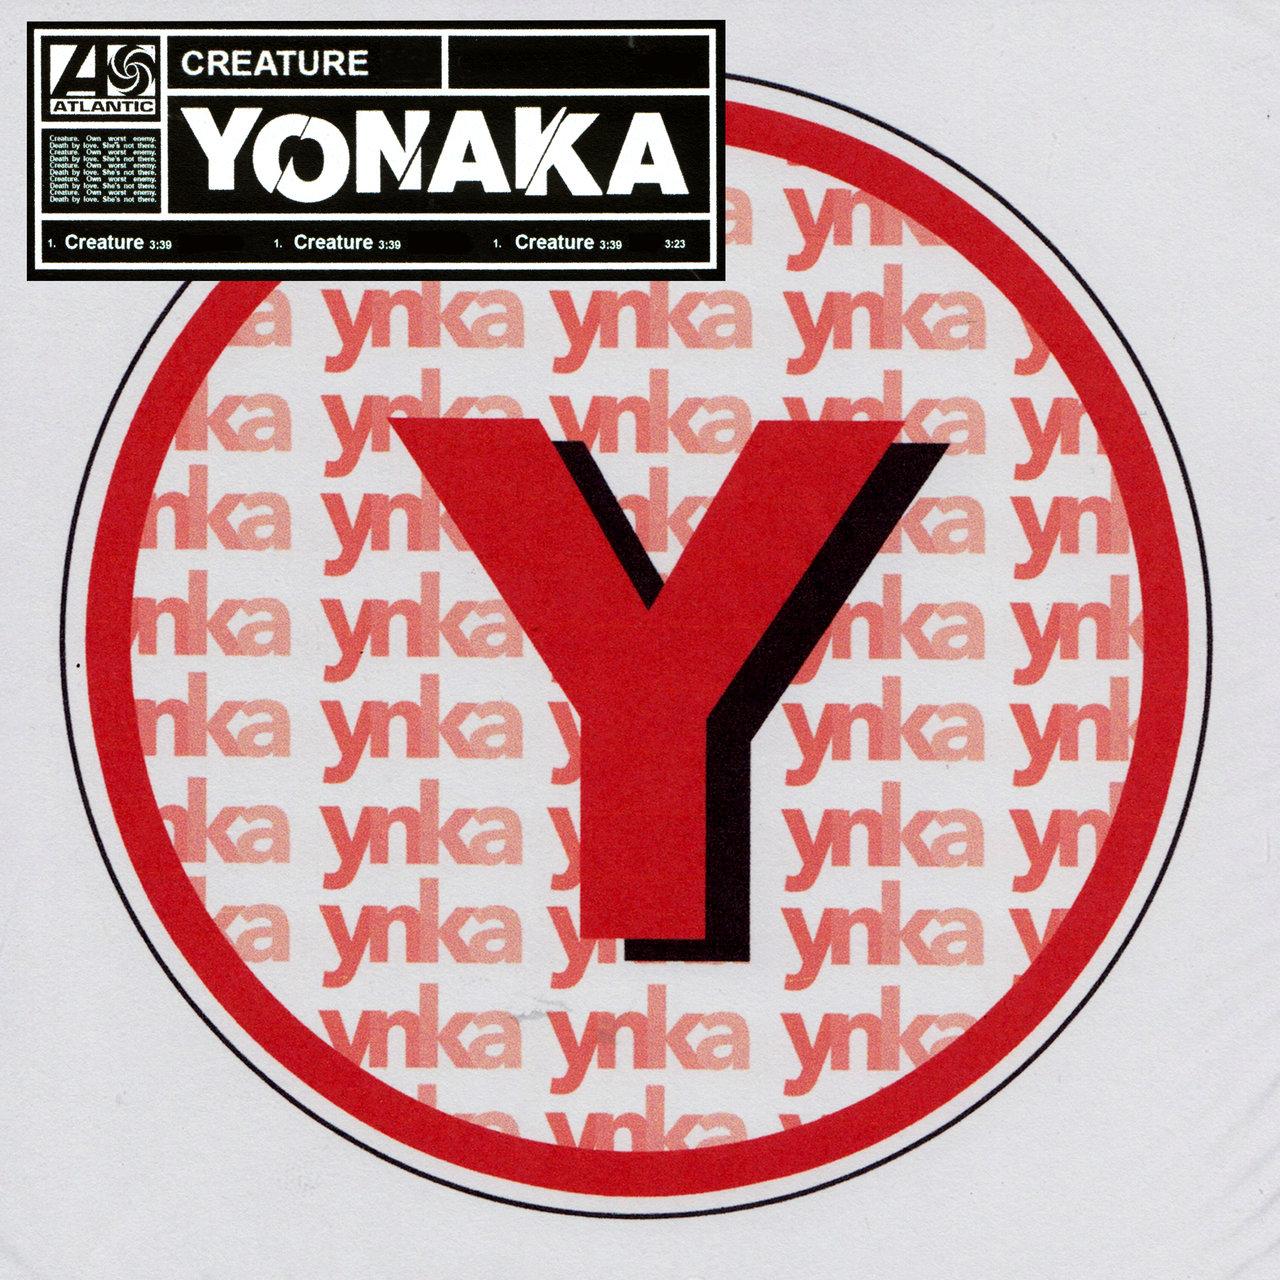 YONAKA Creature cover artwork